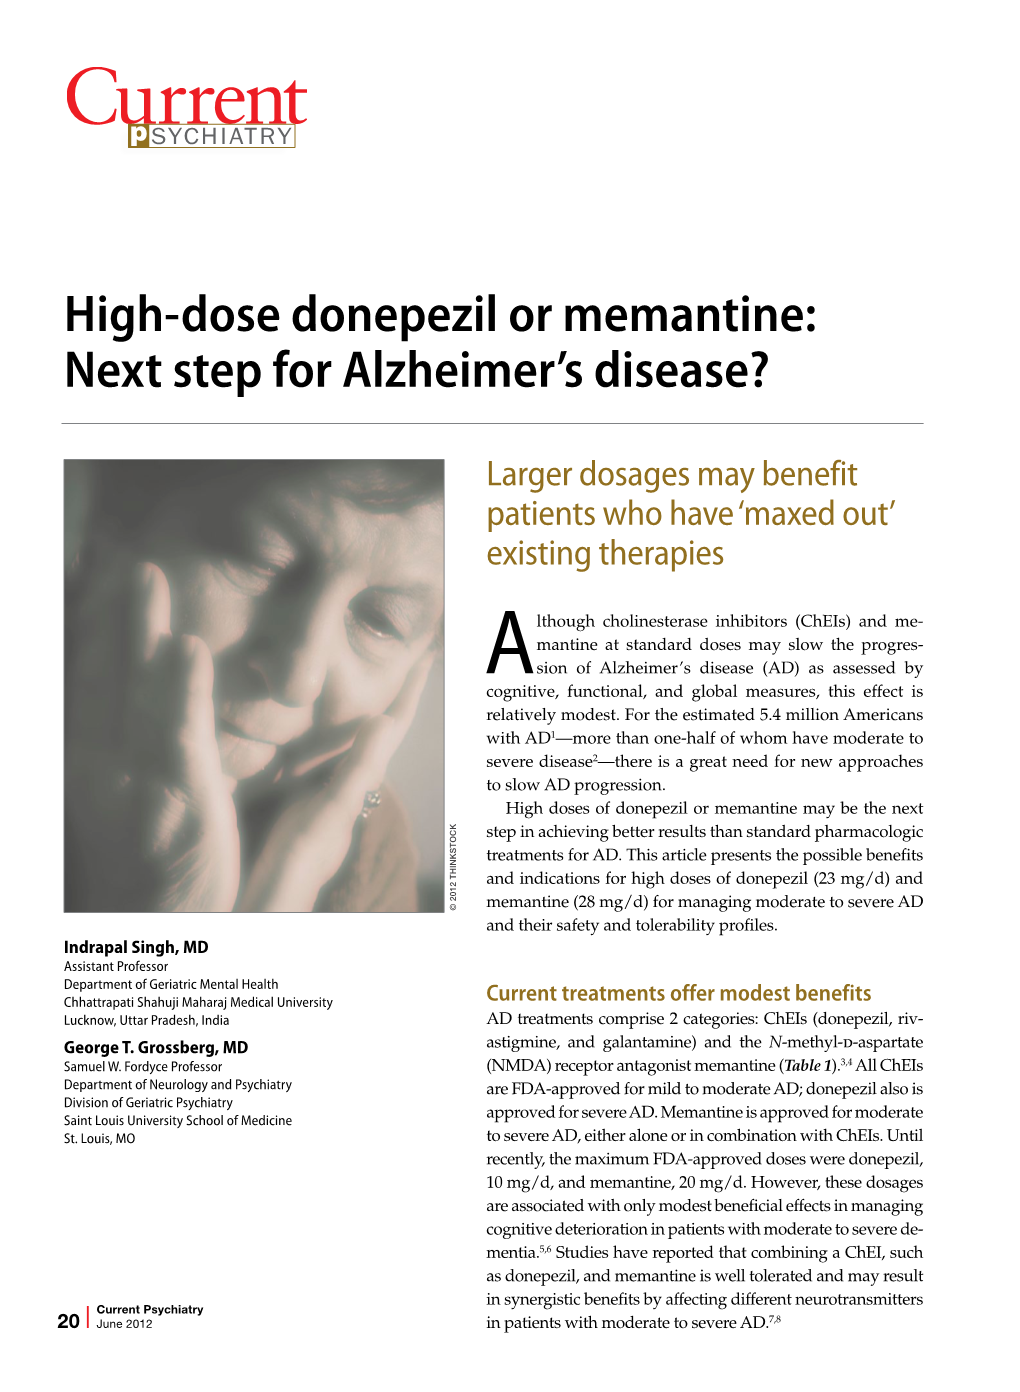 High-Dose Donepezil Or Memantine: Next Step for Alzheimer’S Disease?